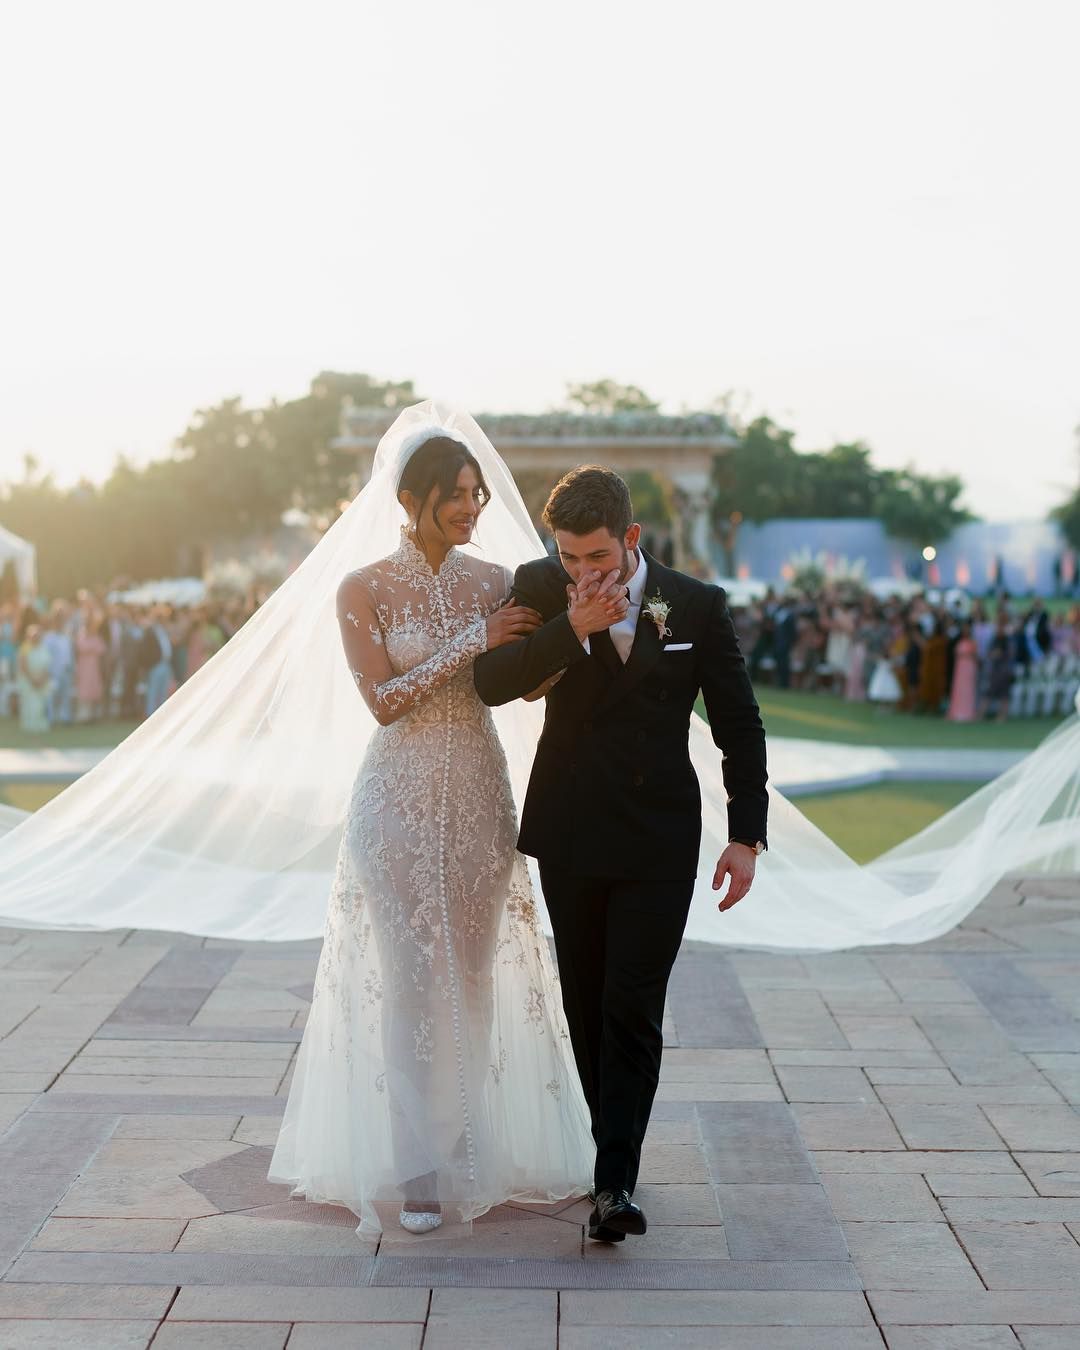 Nick Jonas and Priyanka Chopra's Wedding: Will These A-Listers Be